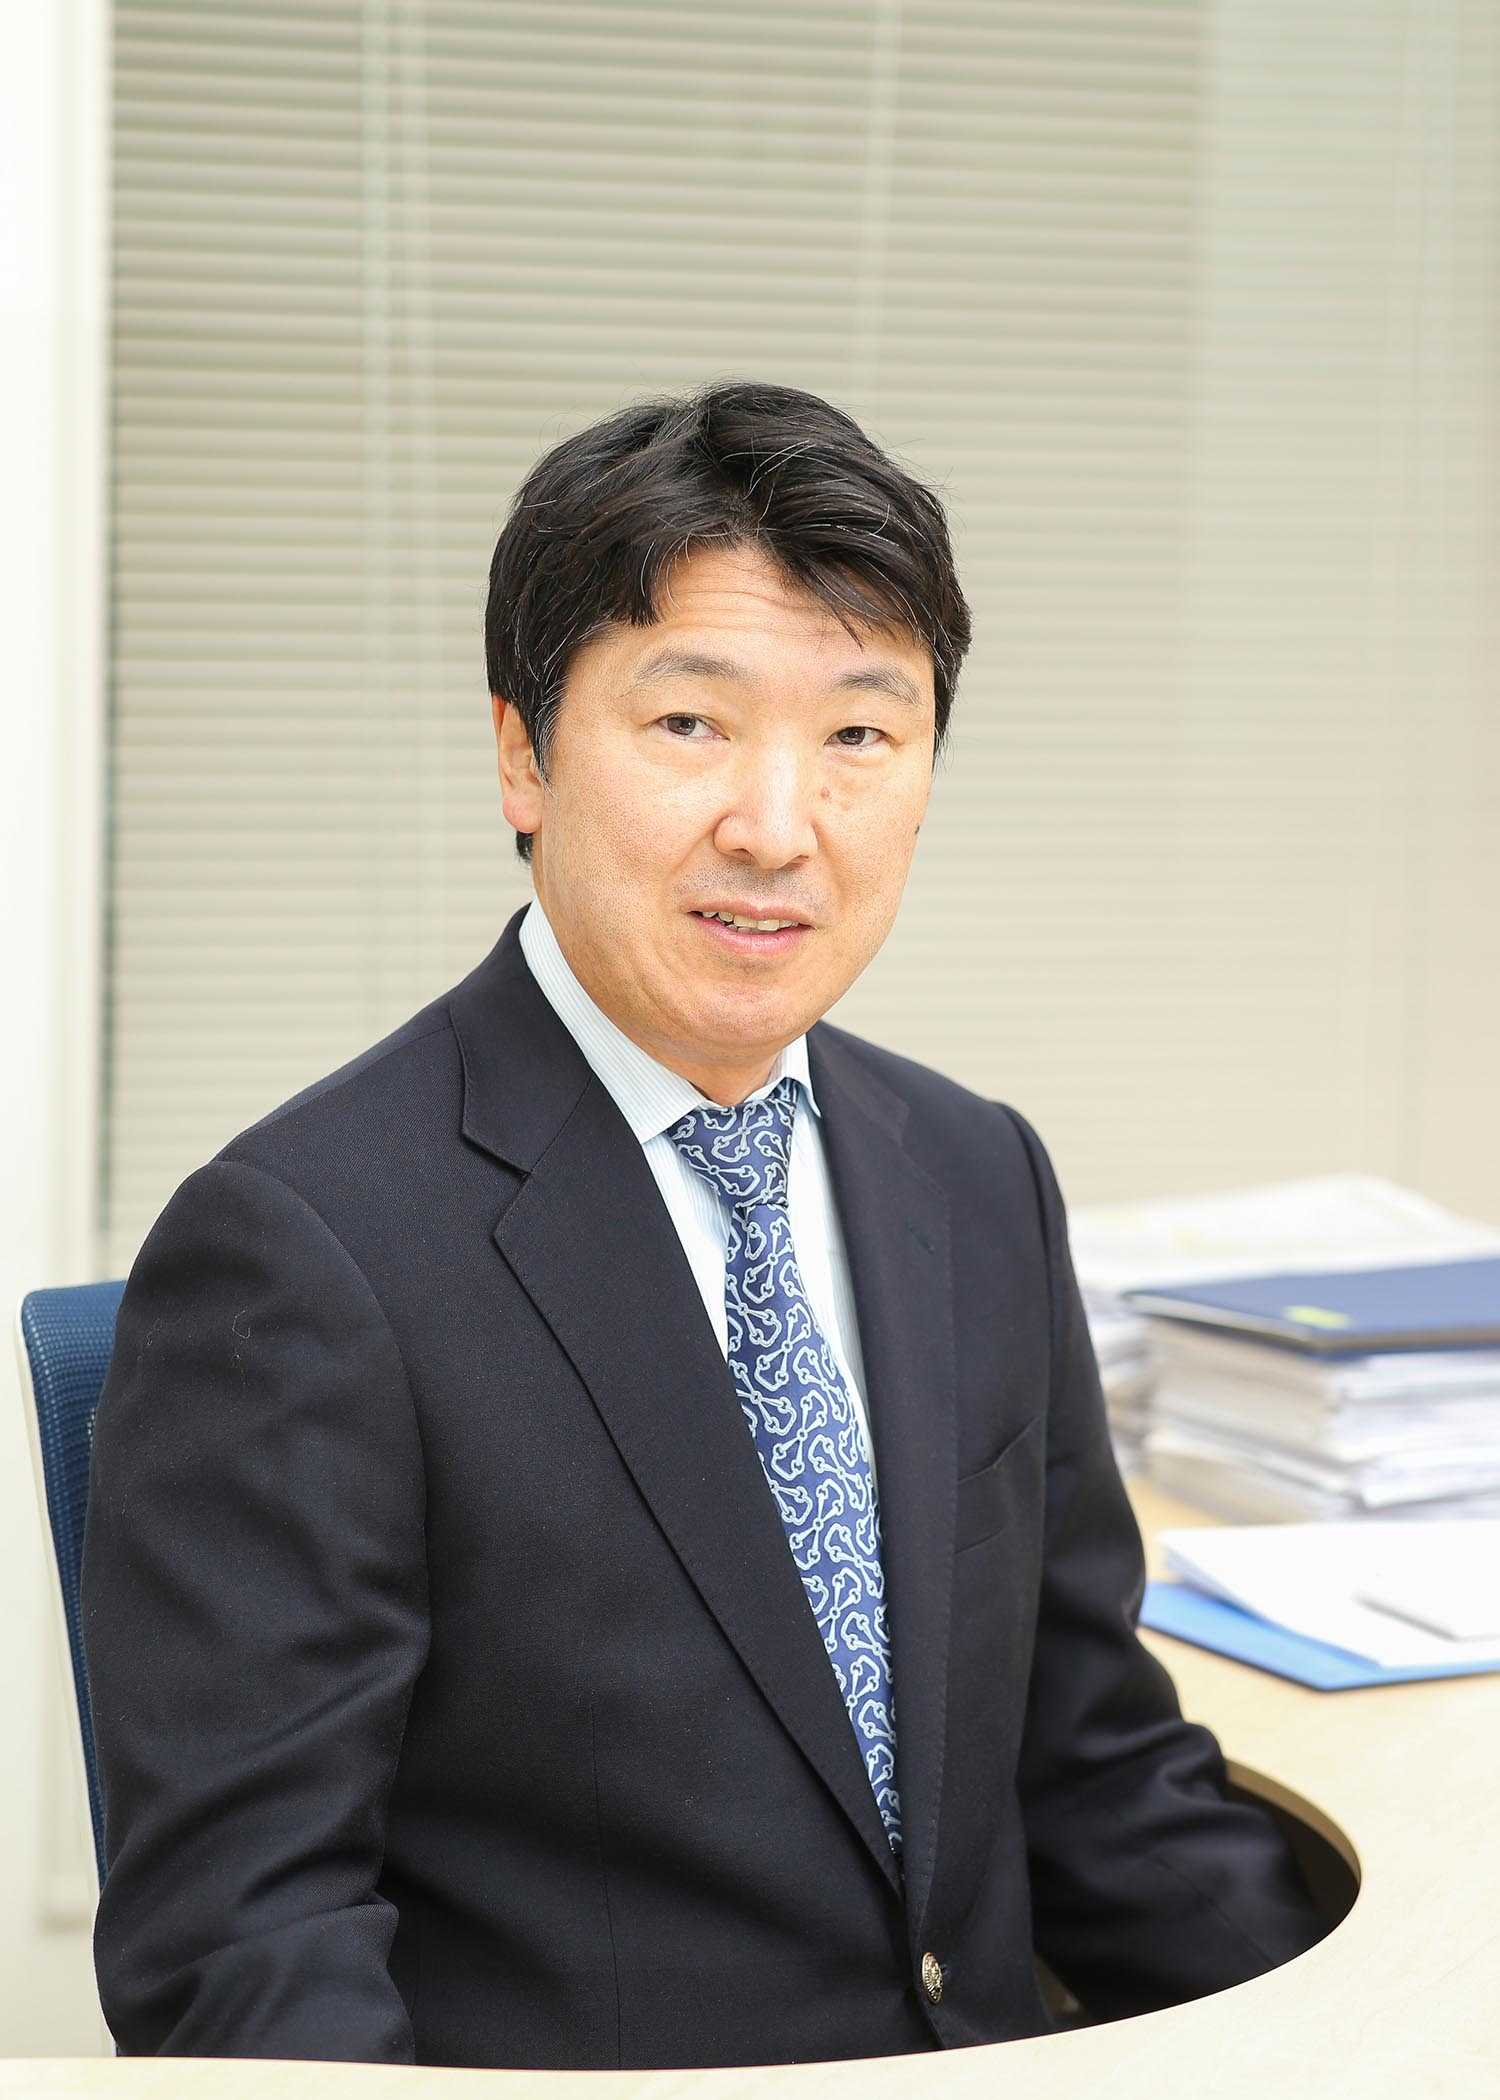 Kimio Mesuda at his desk